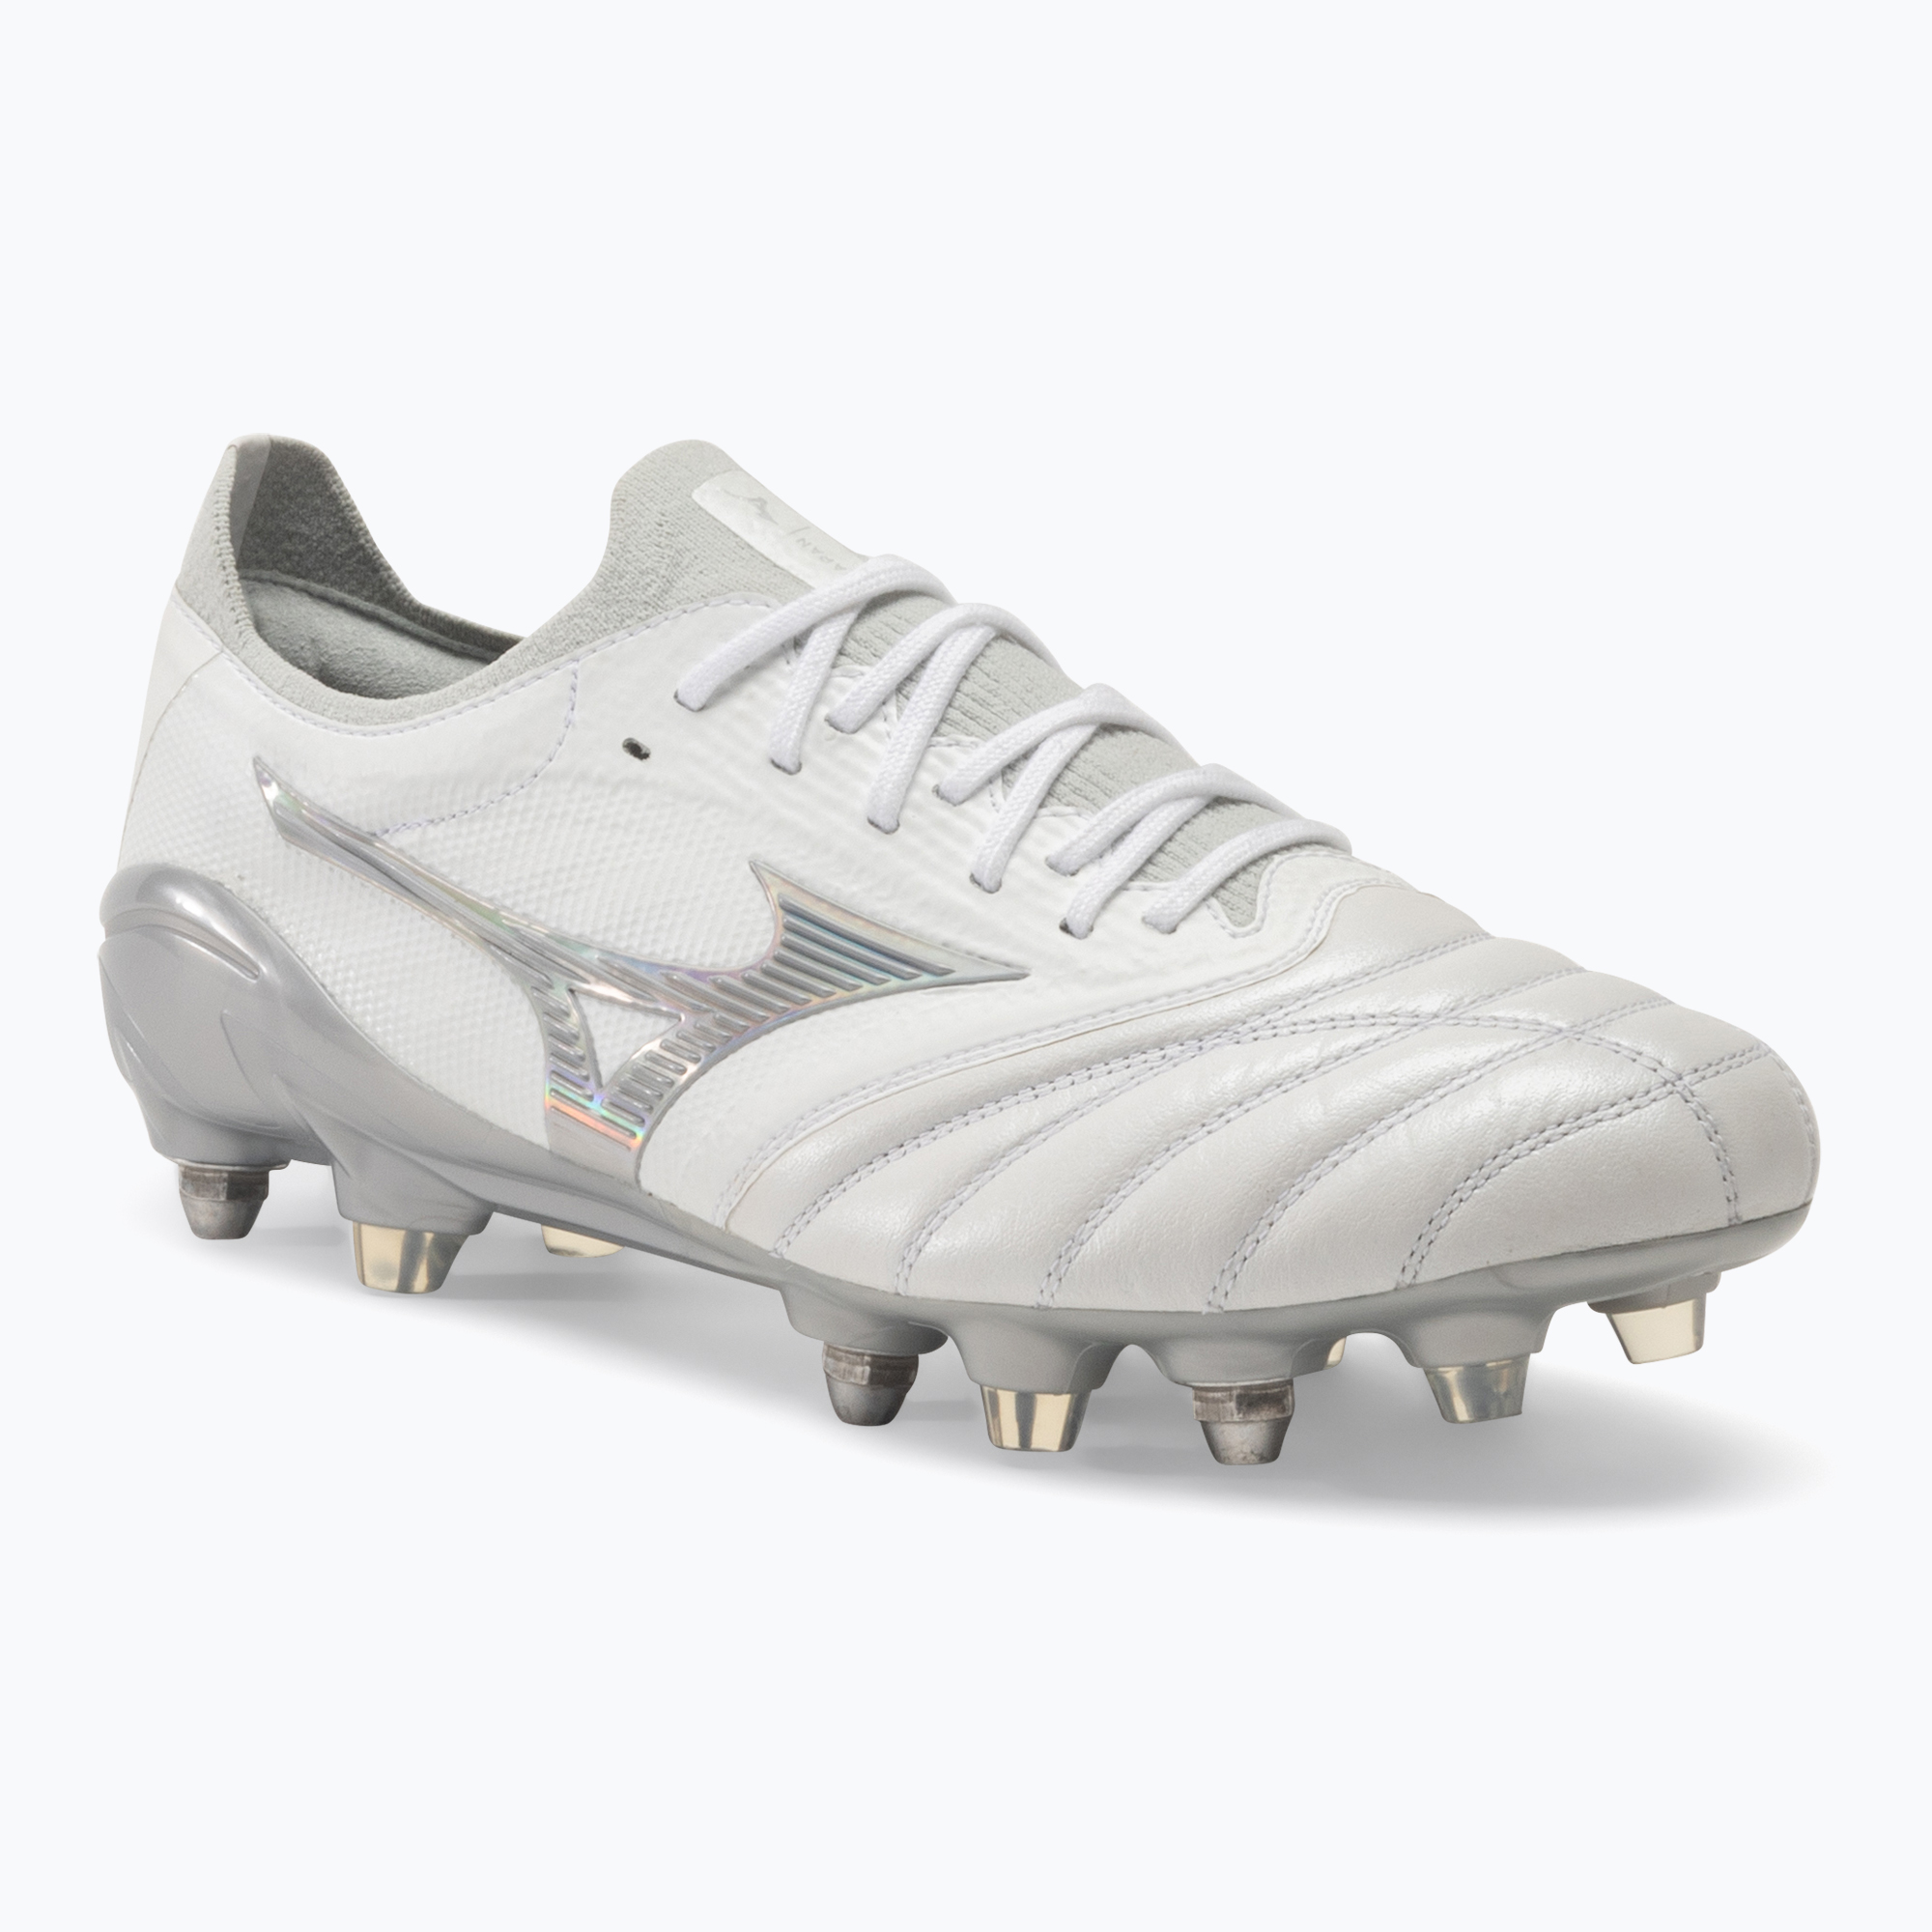 Mizuno Morelia Neo III Beta JMP футболни обувки бяло/холограмно/студено сиво 3c